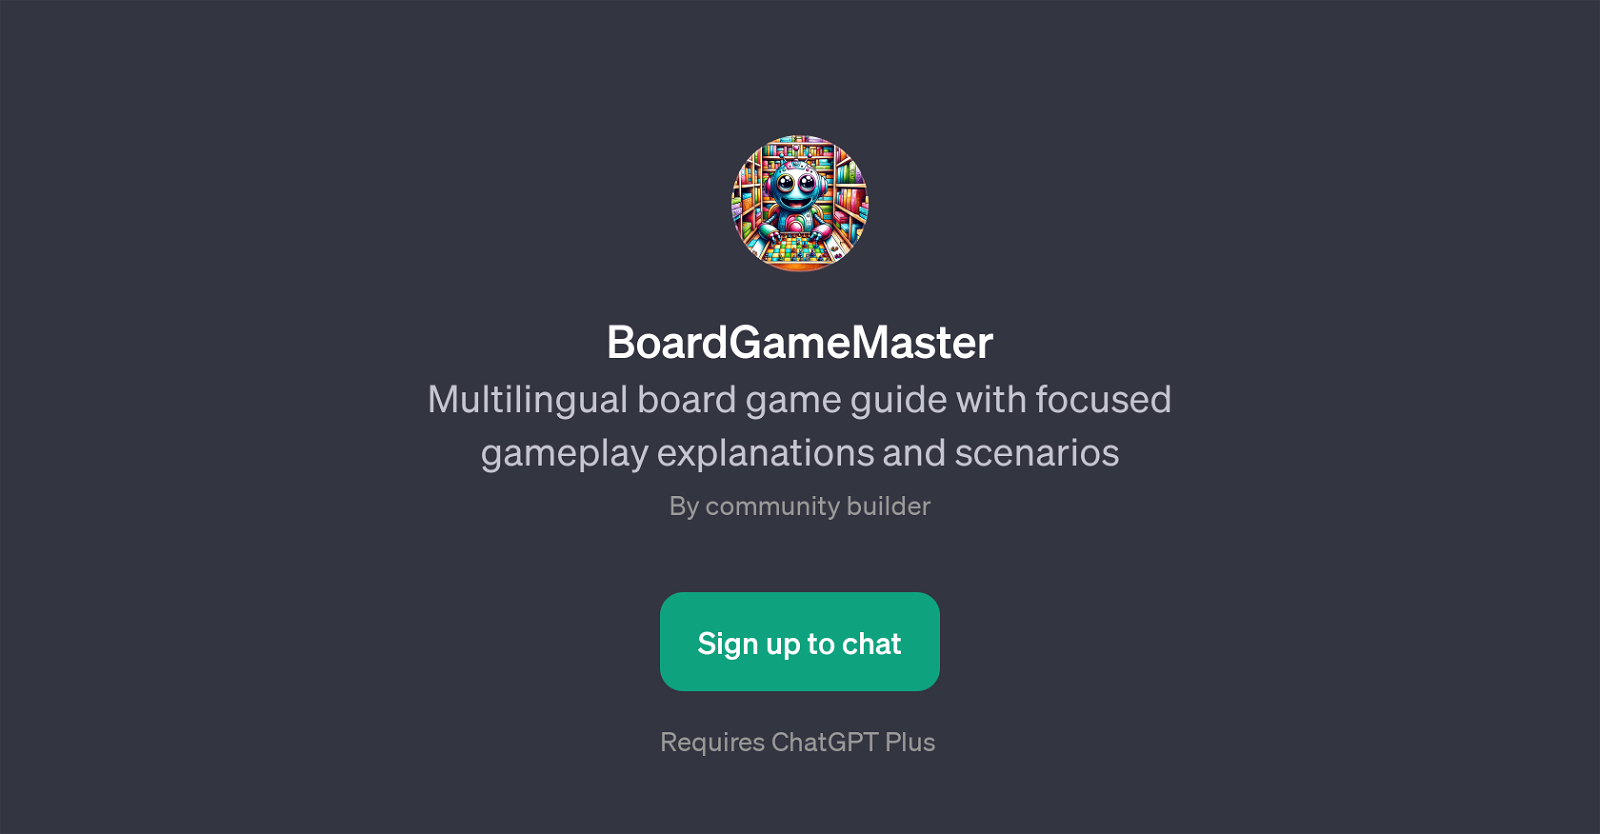 BoardGameMaster website